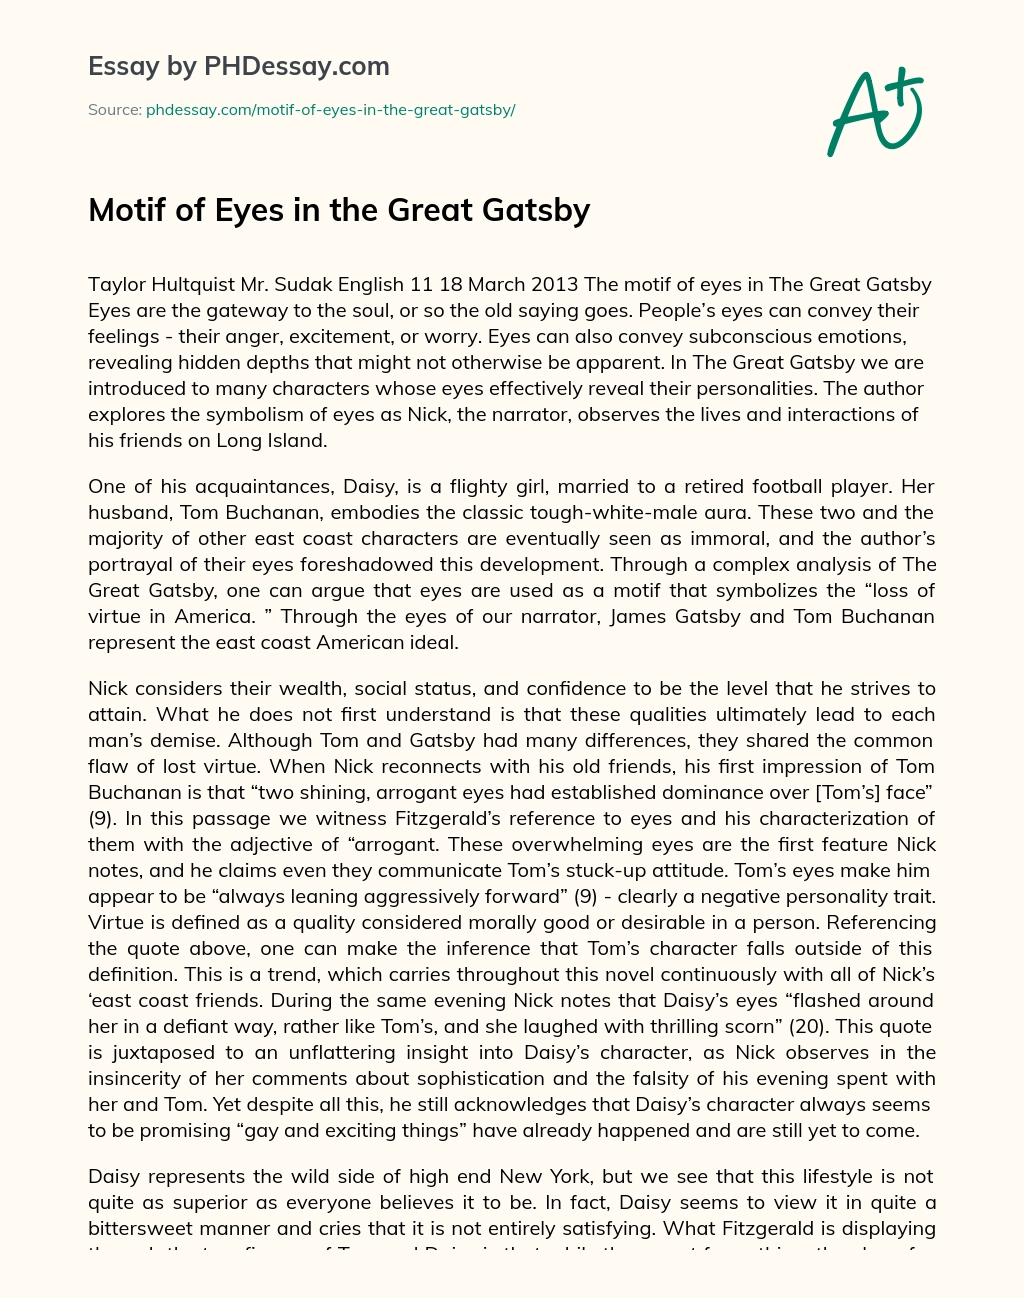 Motif of Eyes in the Great Gatsby essay